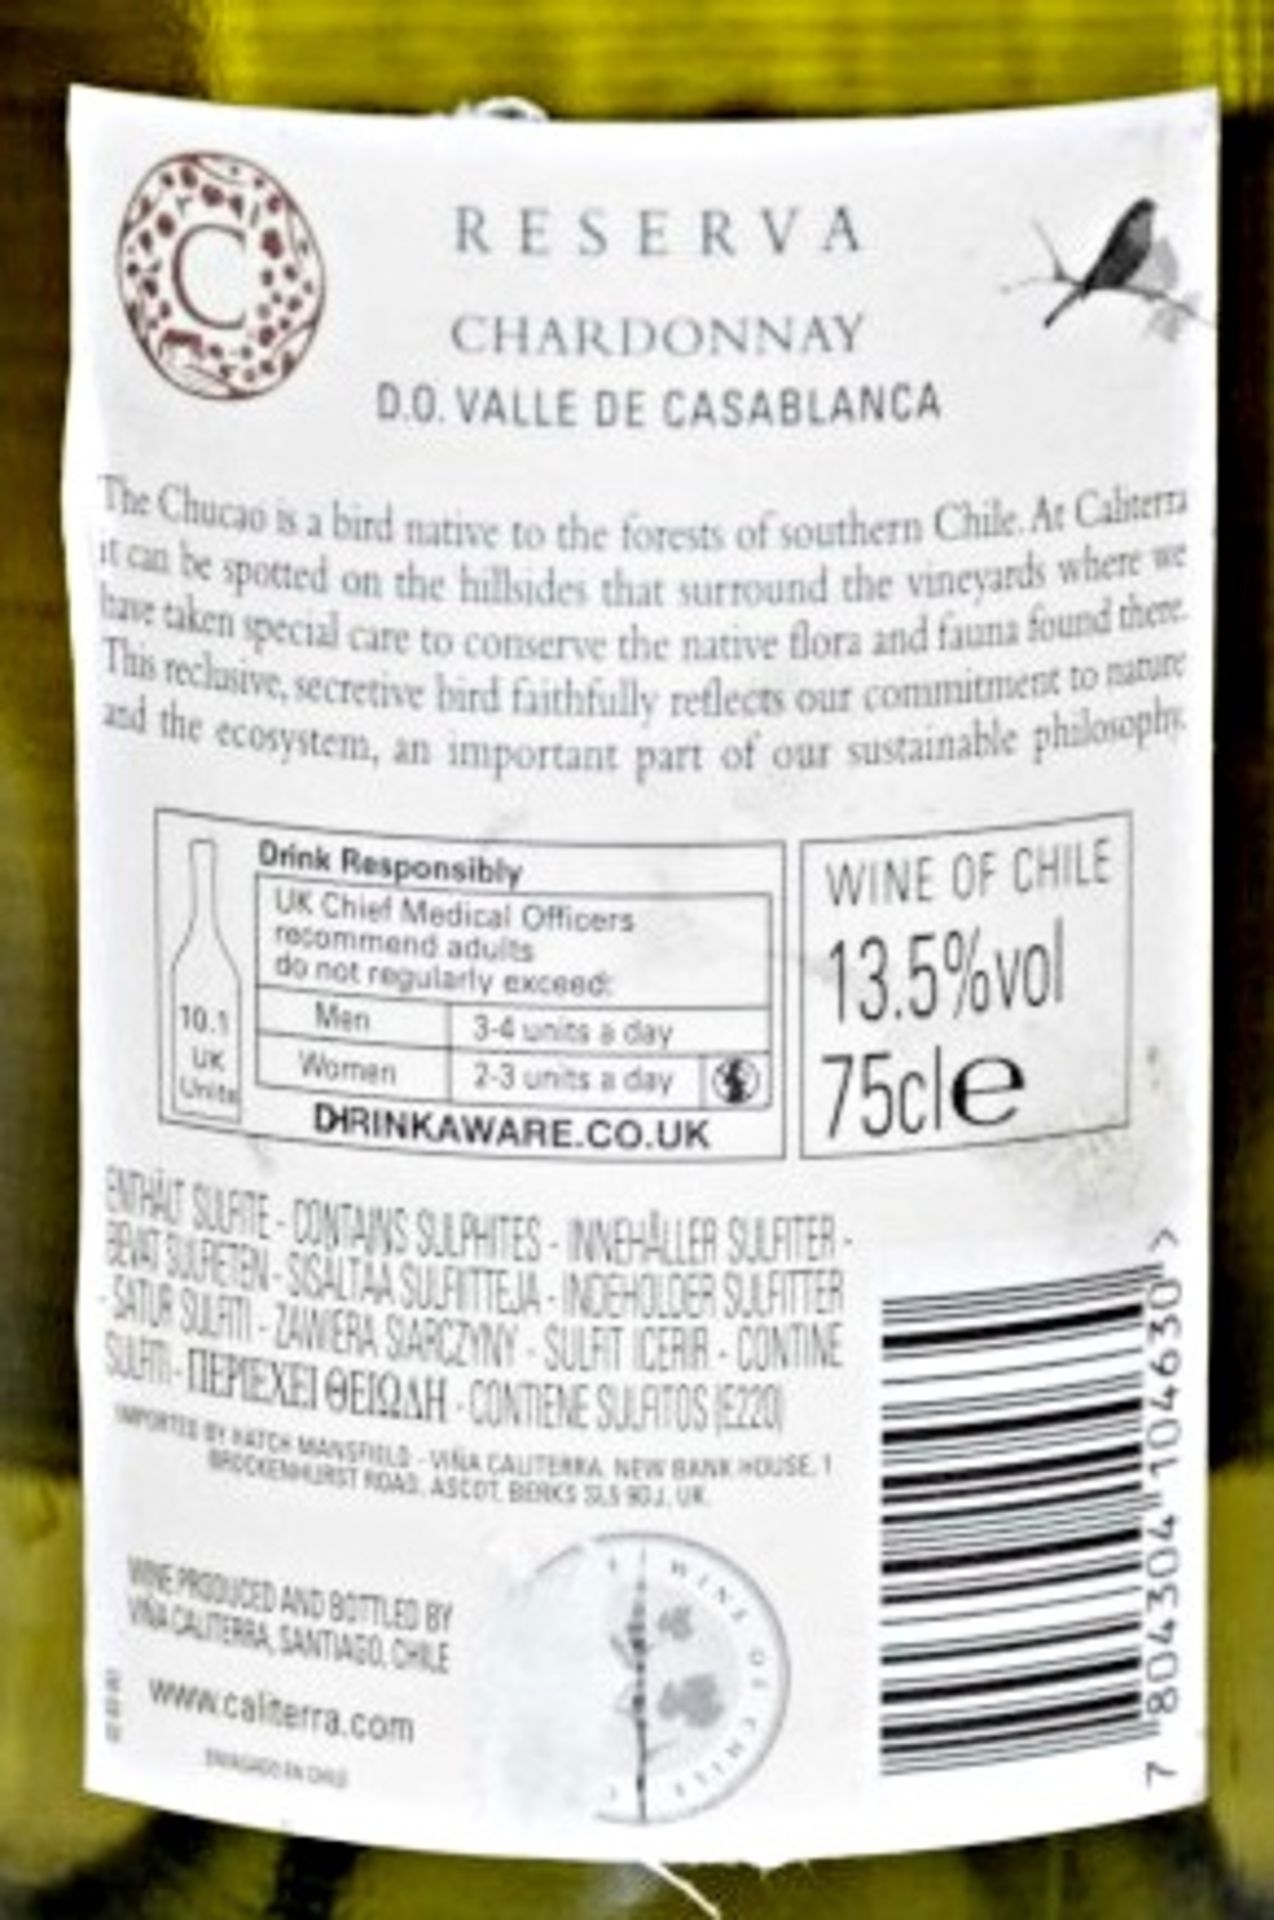 3 x Caliterra Reserva Chardonnay, Casablanca Valley, Chile - 2013 – Bottle Size 75cl - Volume 13. - Image 2 of 3